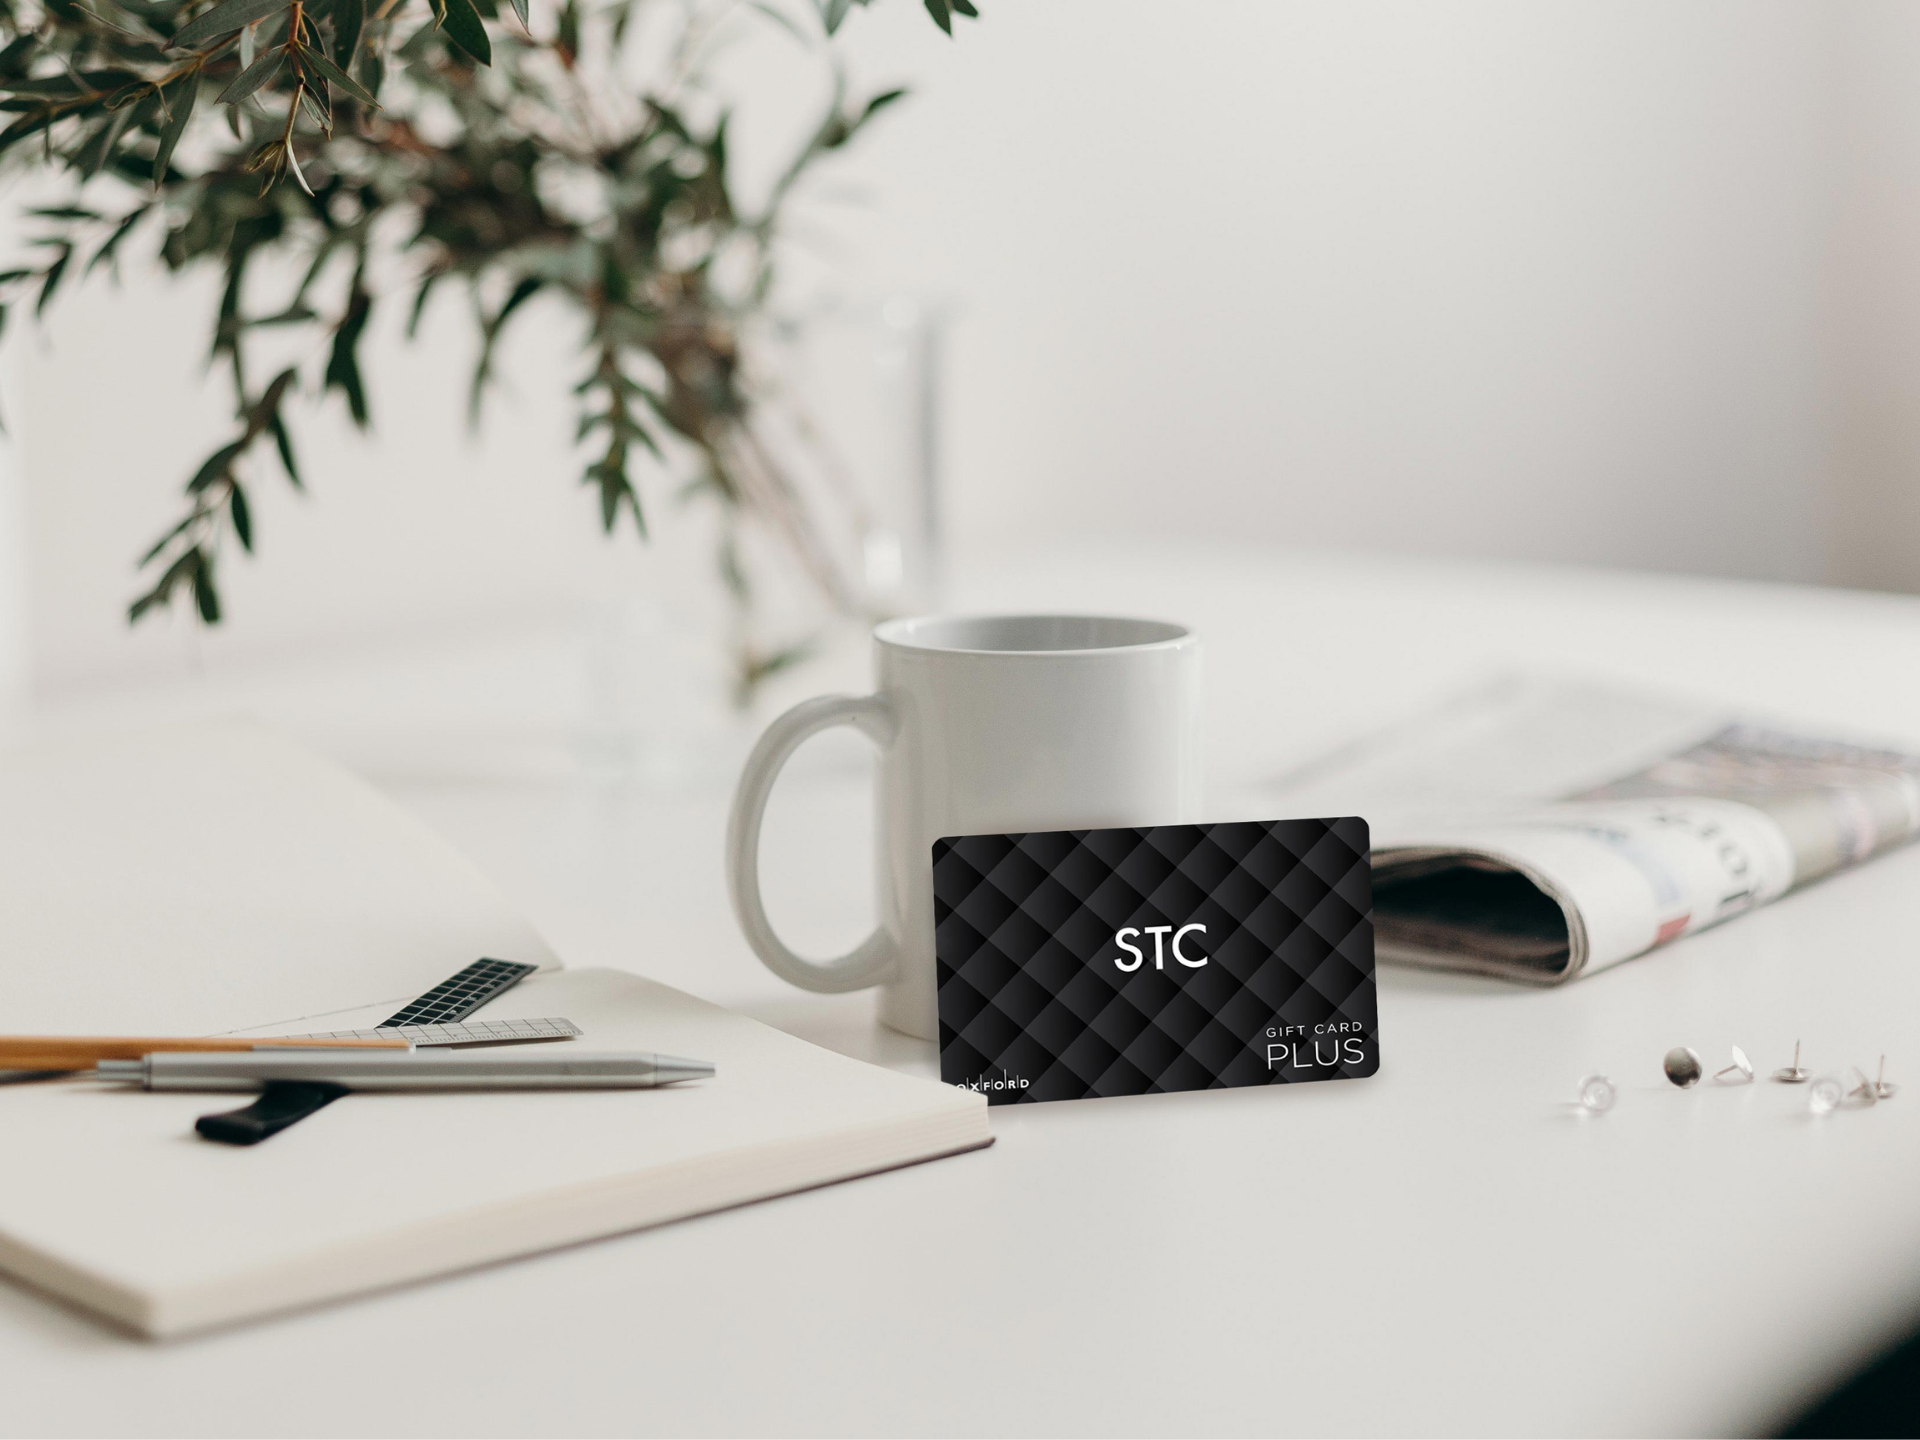 STC gift card and white mug